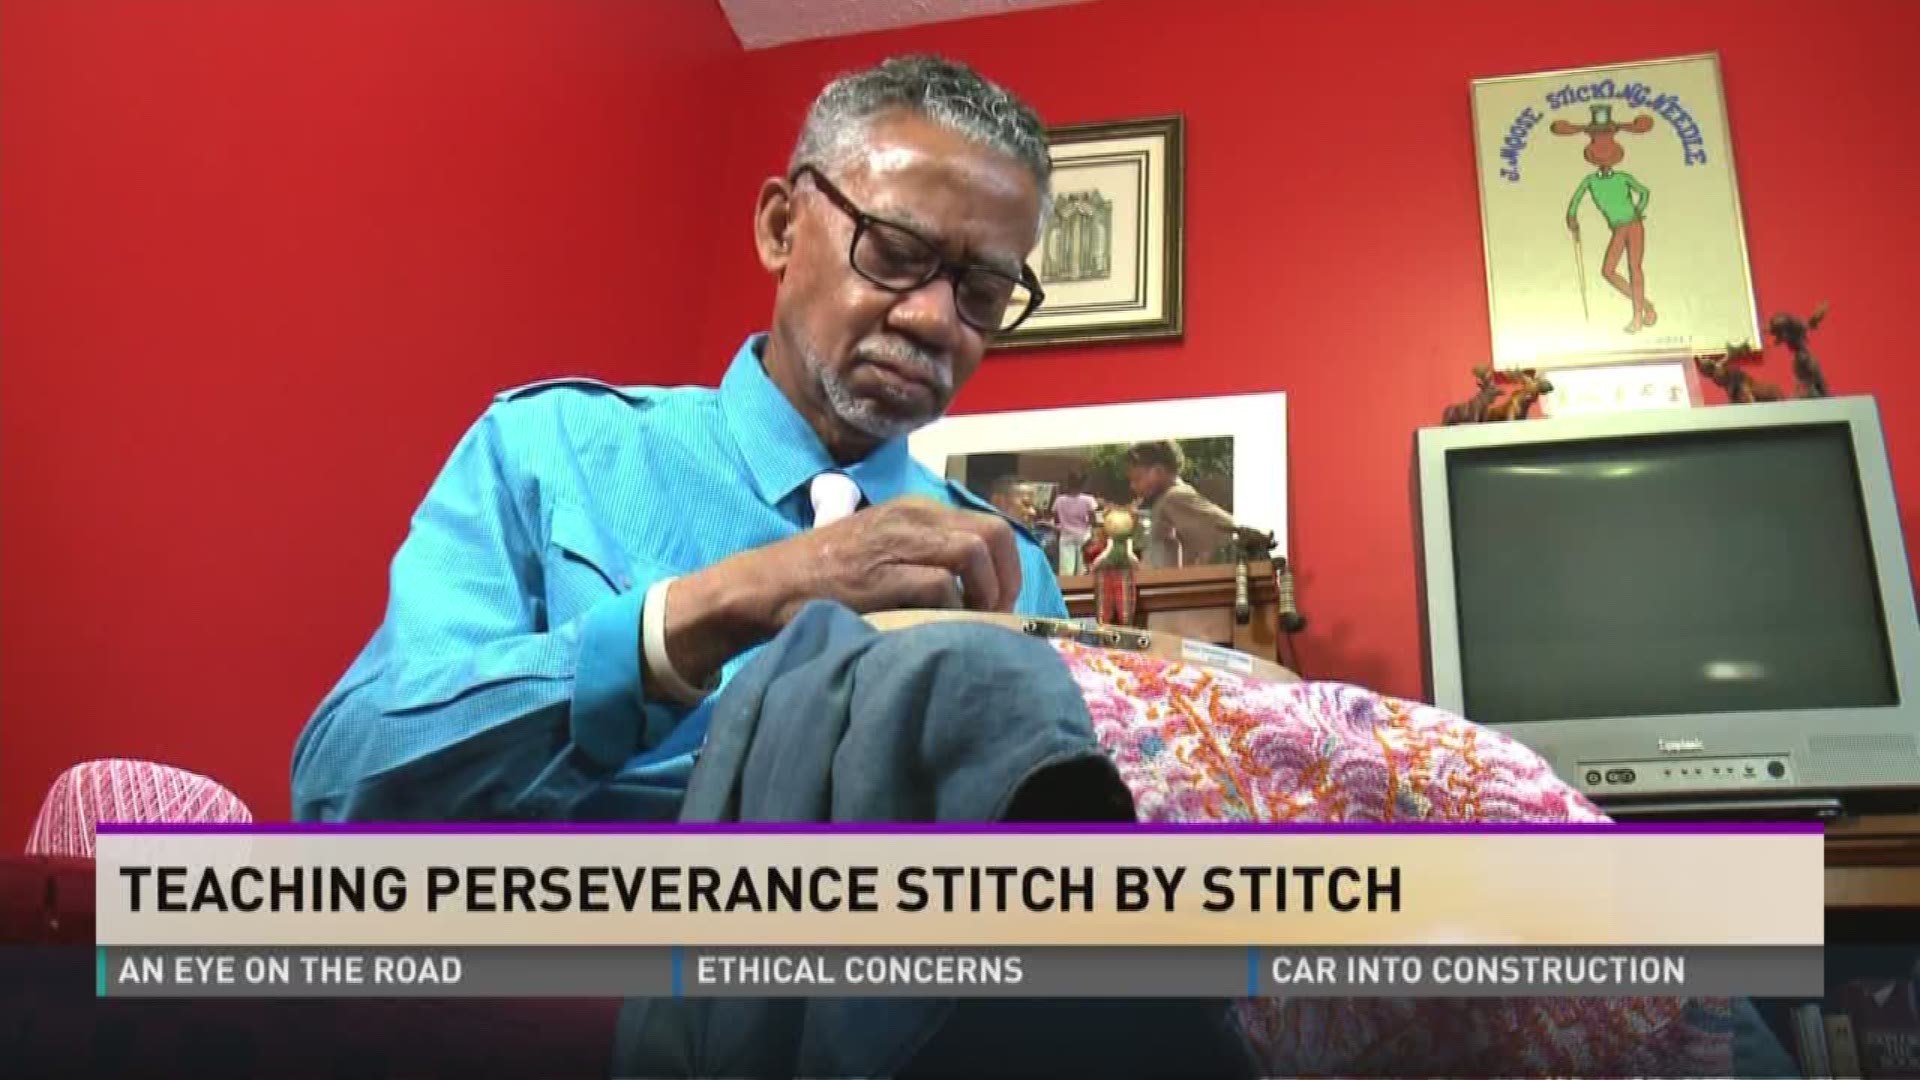 Teaching perseverance, stitch by stitch